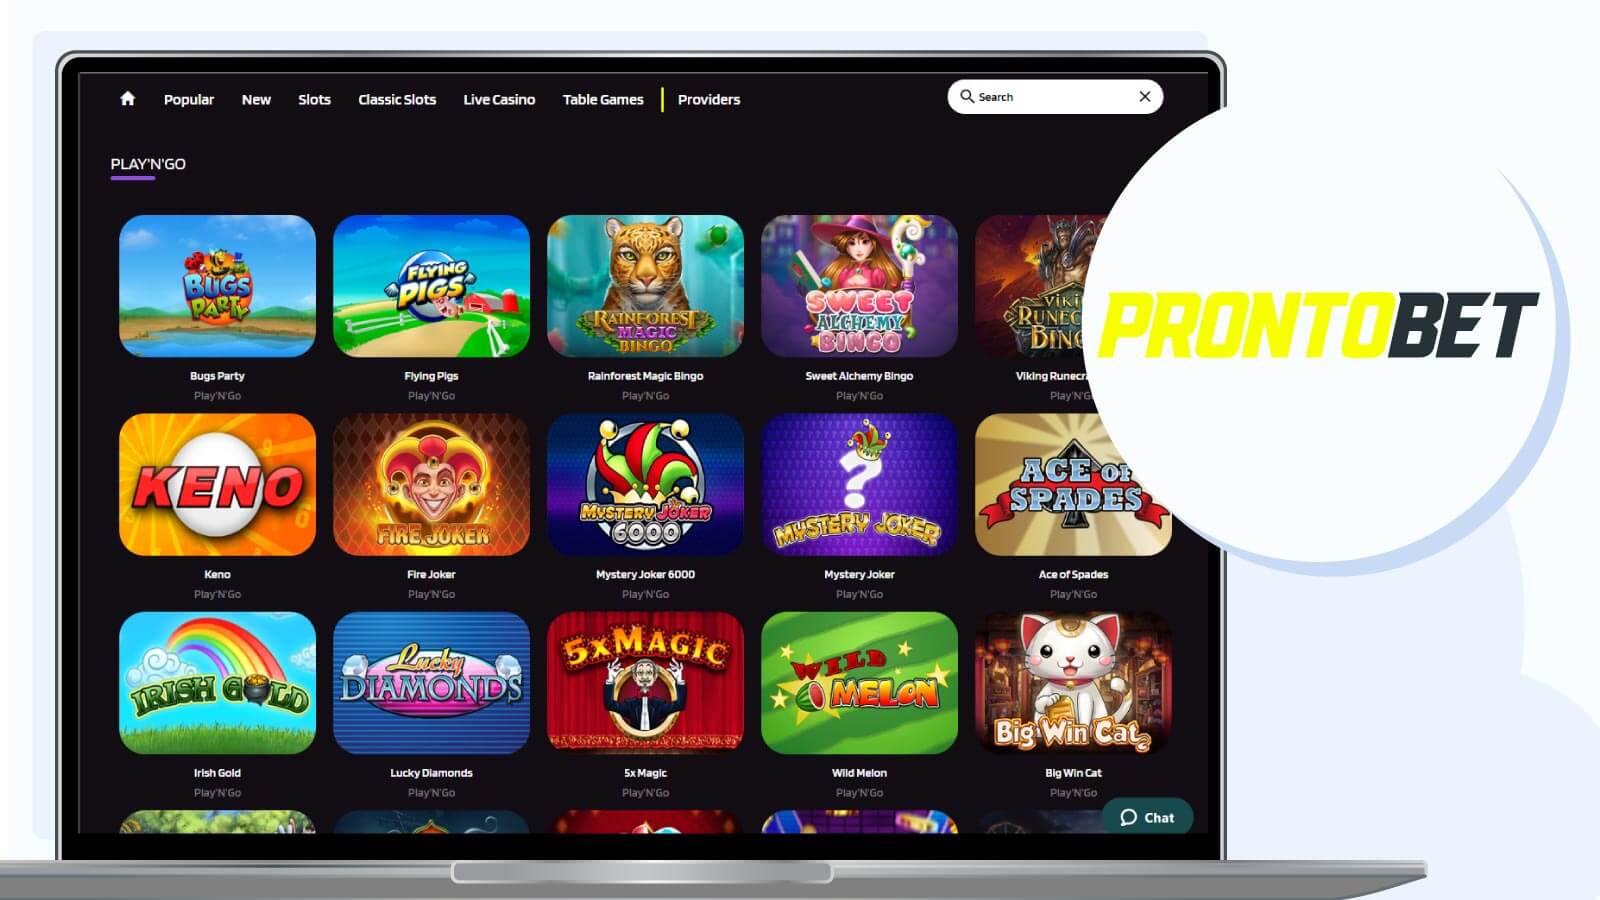 ProntoBet Casino – Best High Roller Play’n Go Casino